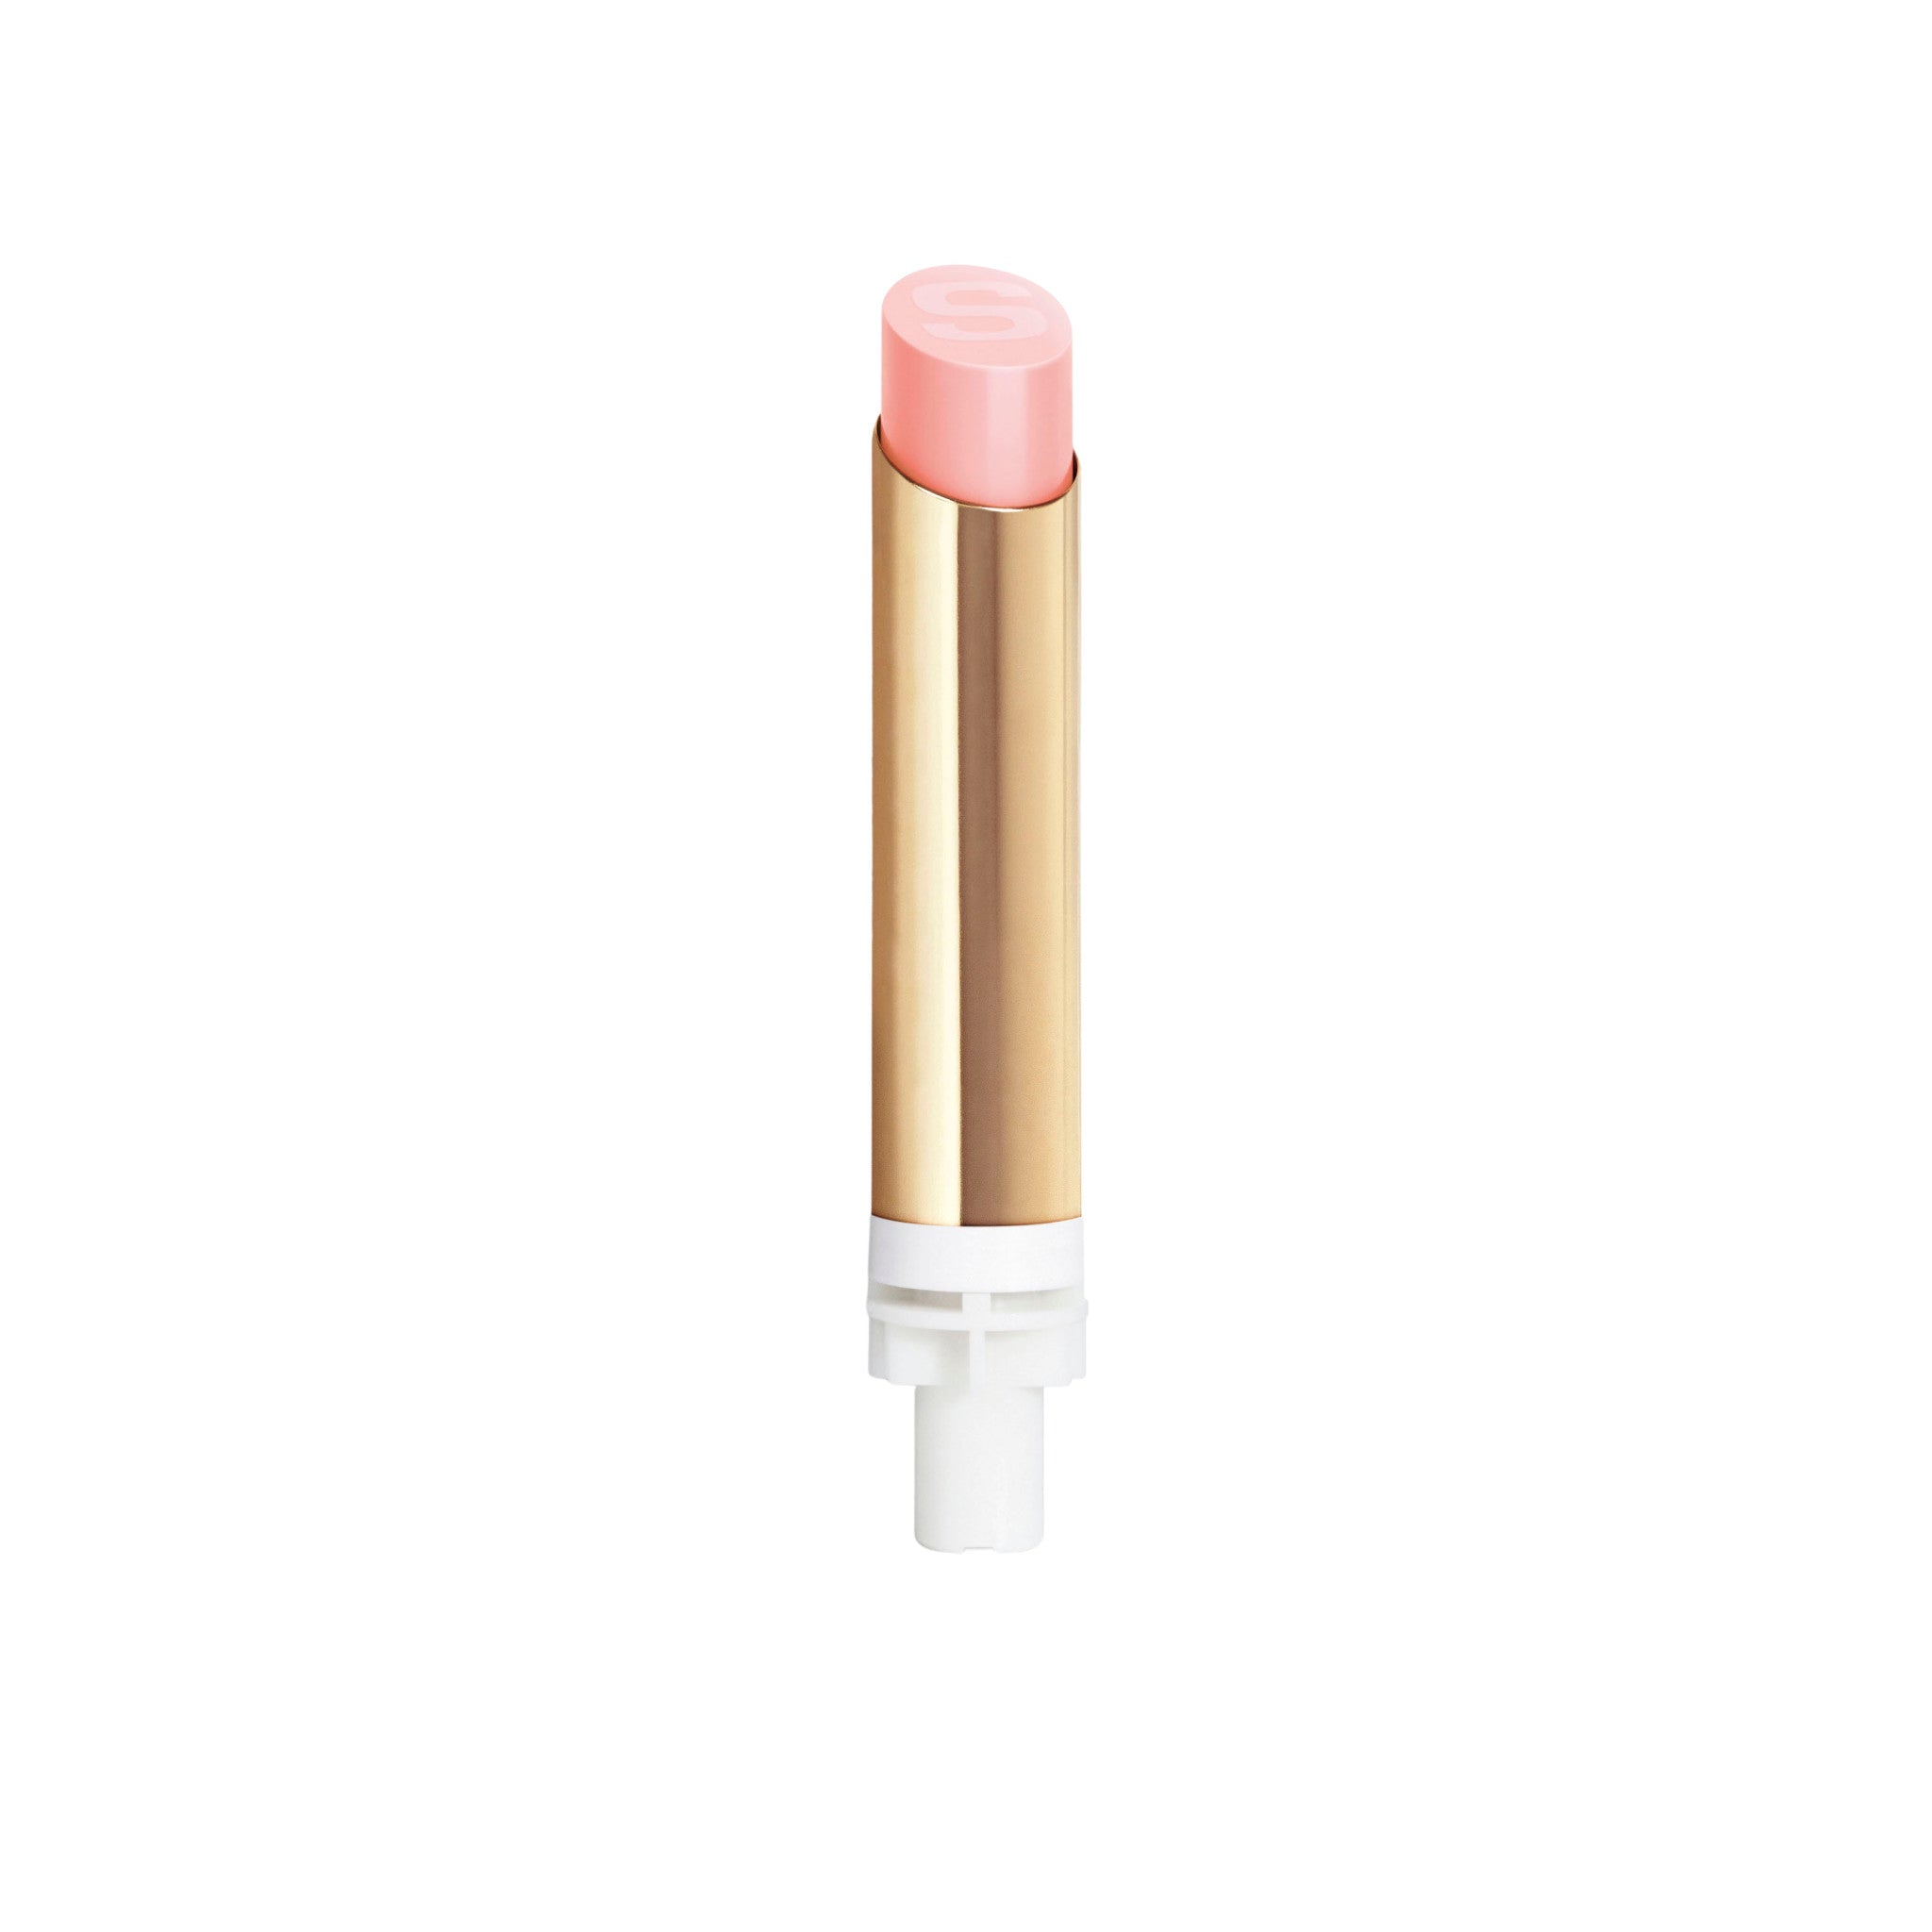 Sisley Paris Phyto-lip Balm Refill In Pink Glow